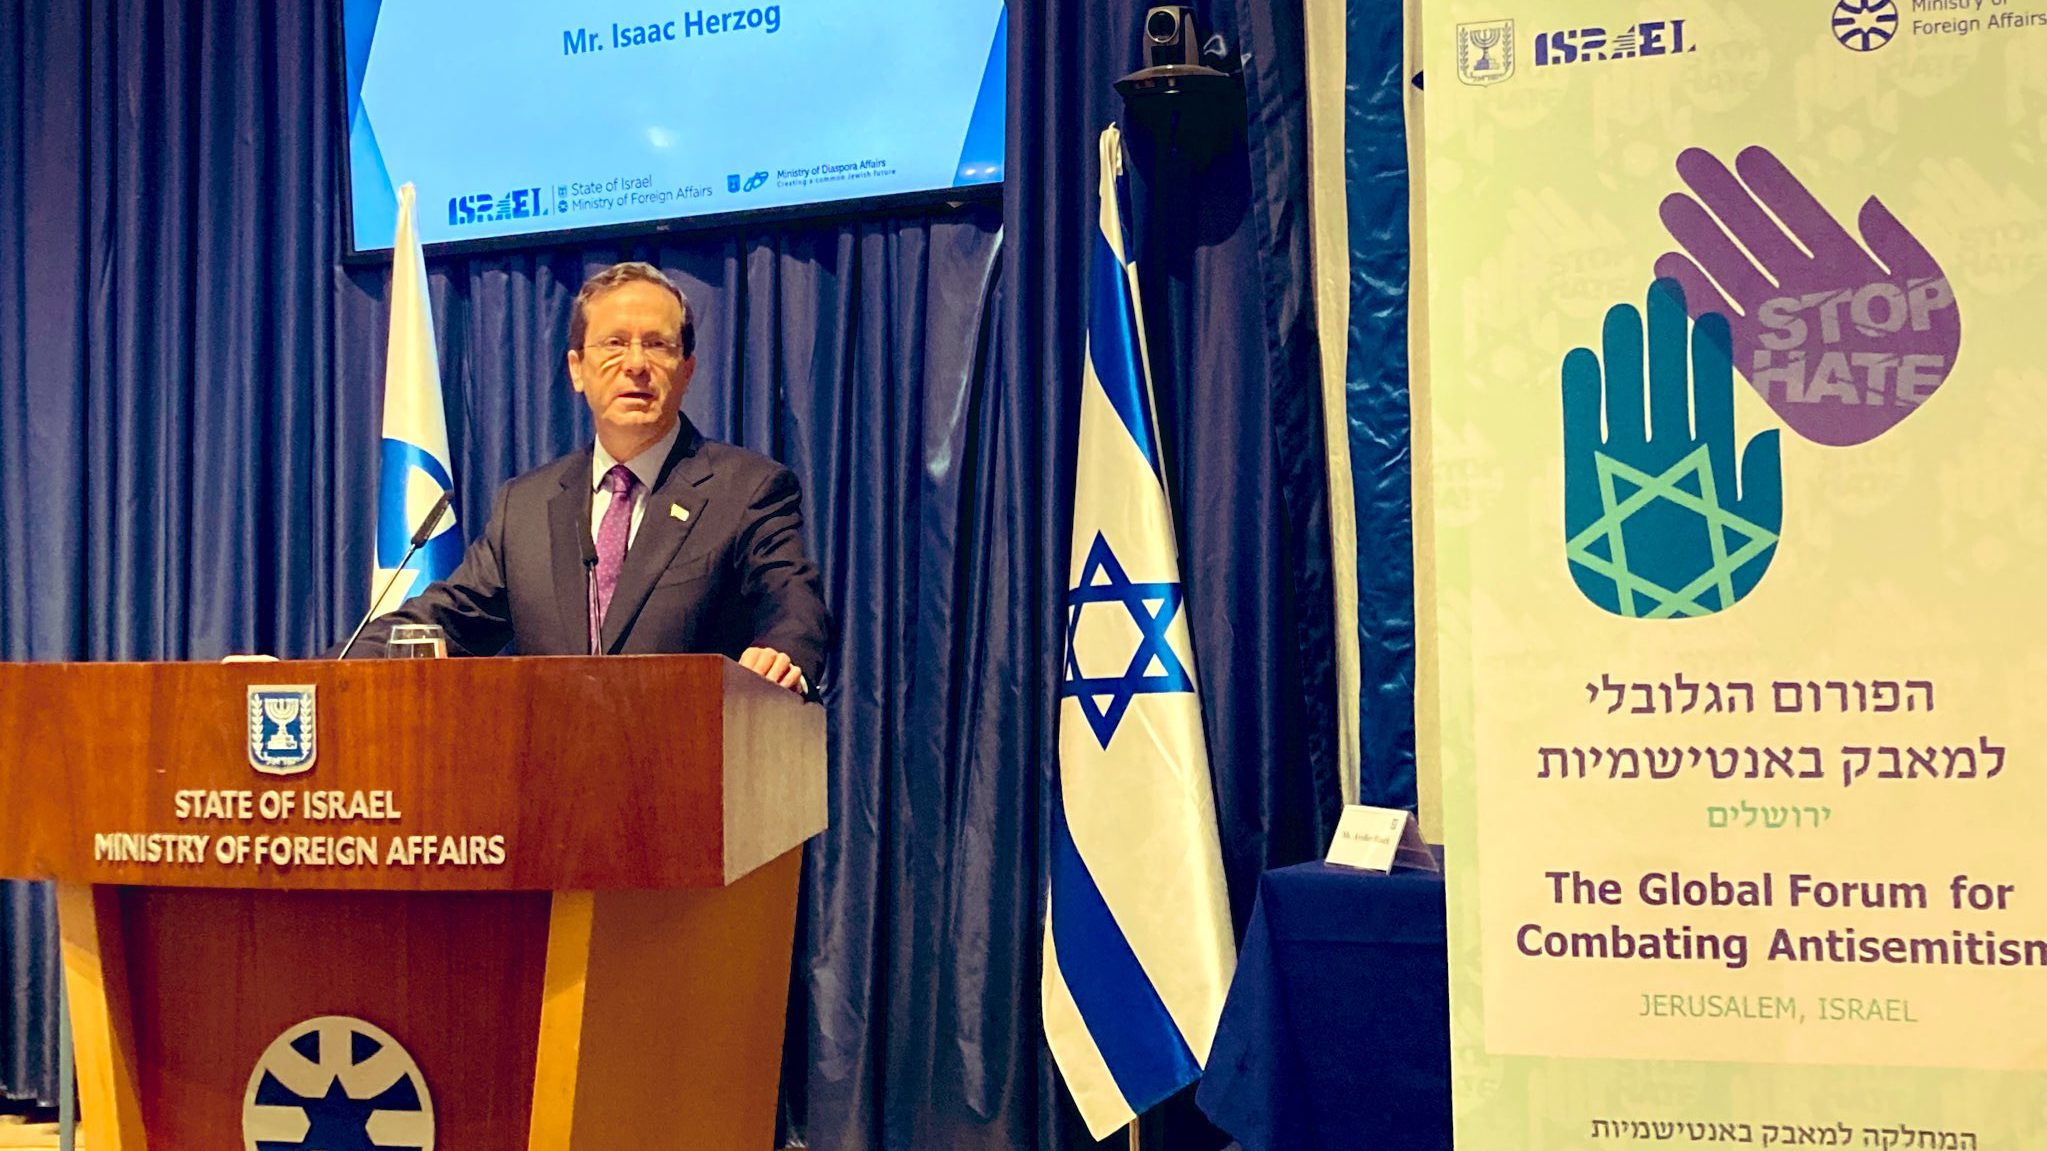 Herzog Opens Global Forum for Combating Antisemitism